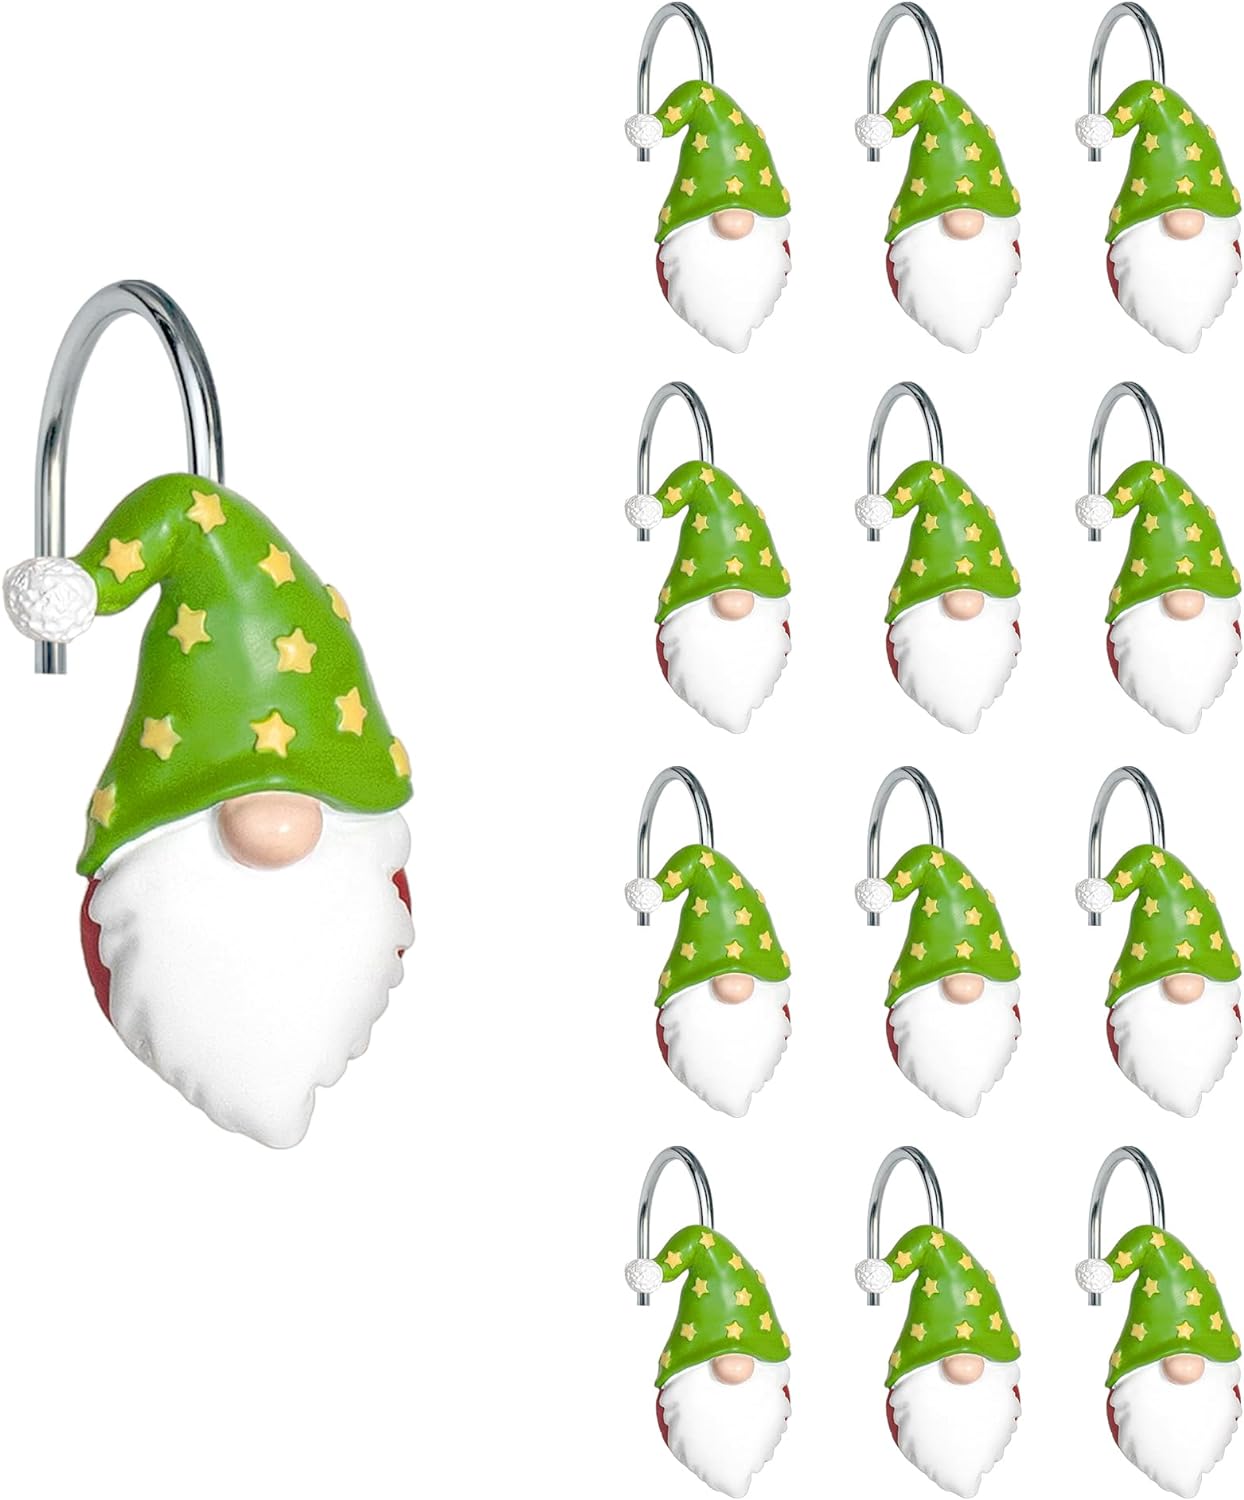 Sunlit Christmas Shower Curtain Hooks, Gnome Shower Curtain Rings, Hand Painted Resin Christmas Decor, Winter Bathroom Decoration, Black Top Hat, Set of 12